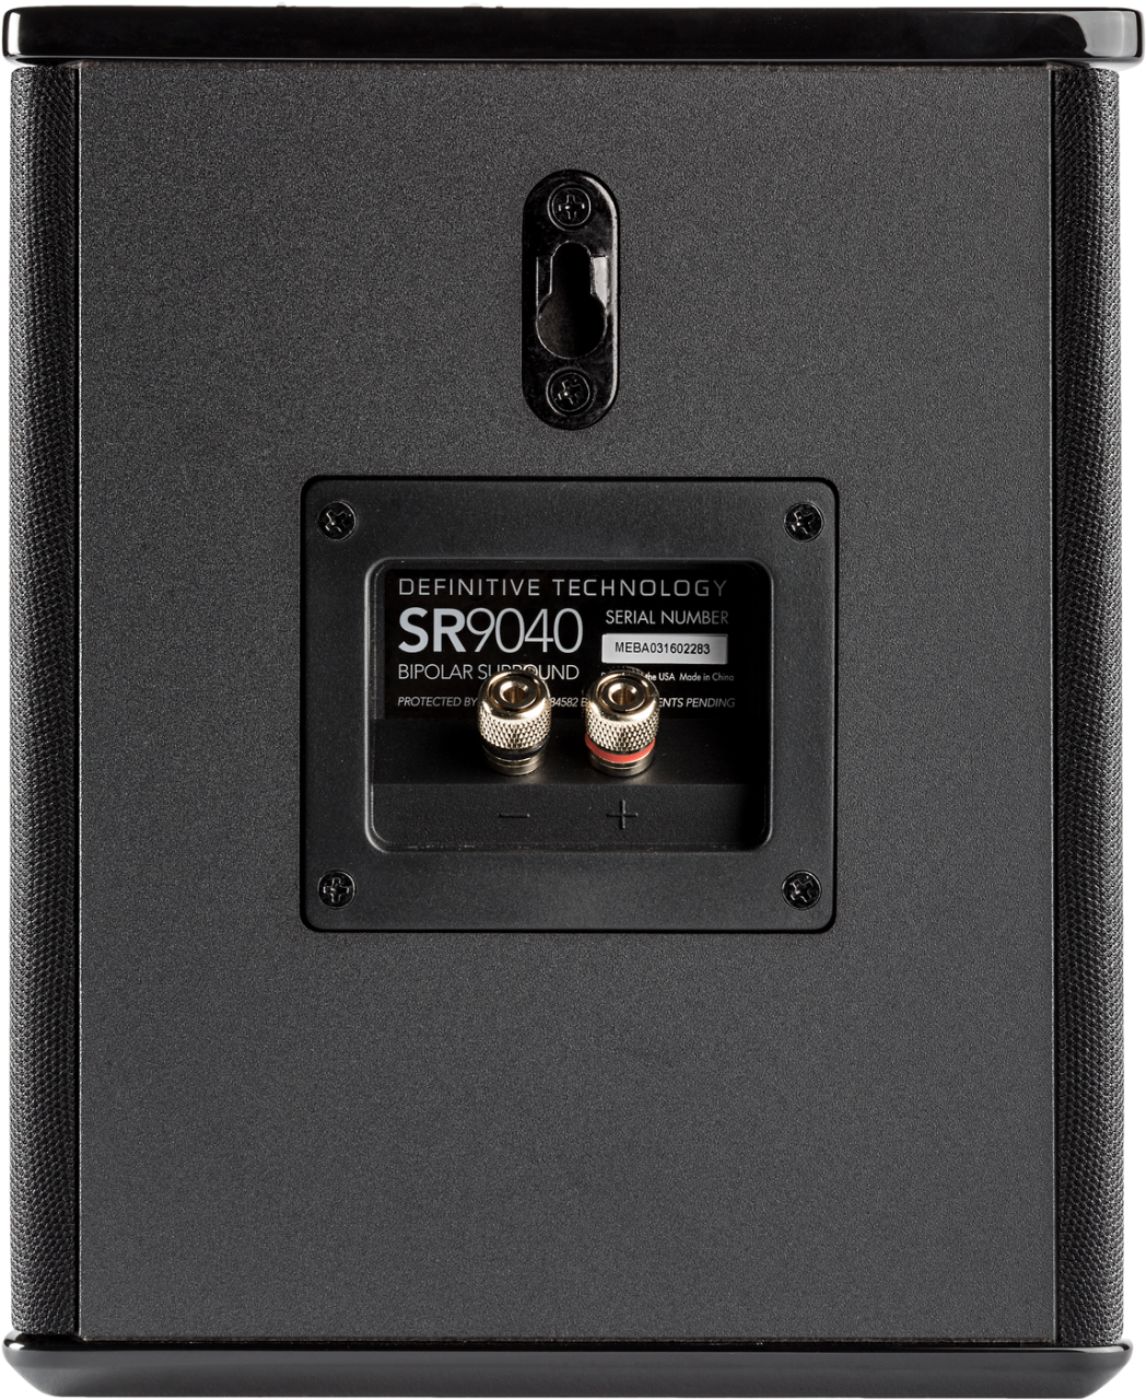 Back View: Definitive Technology - SR-9040 10” Bipolar Surround Speaker, High Performance, Premium Sound Quality, Single - Black